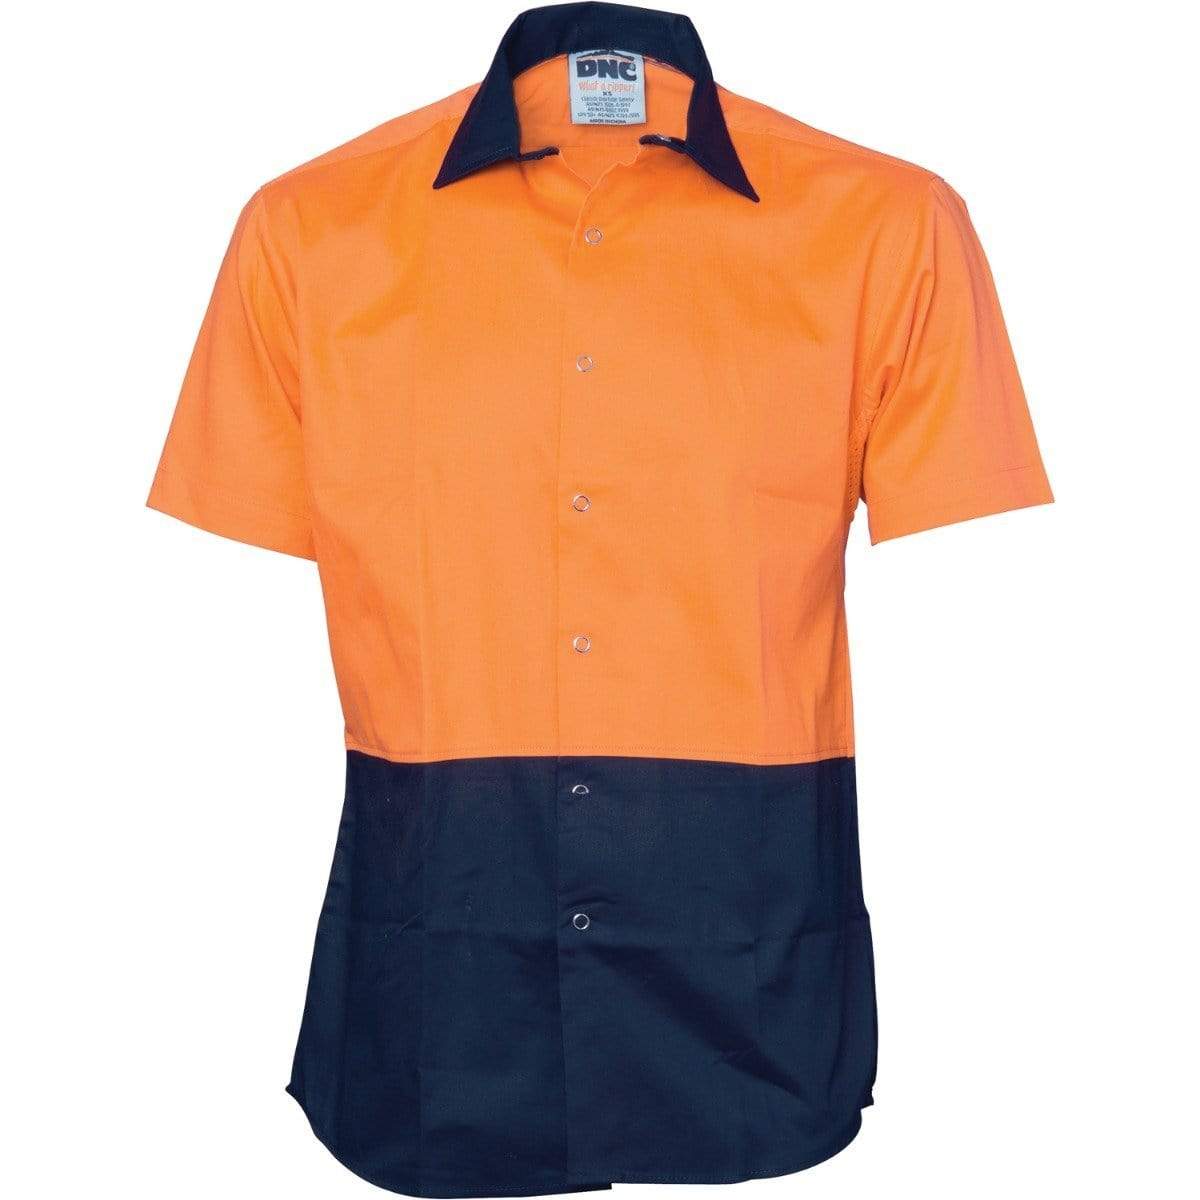 Dnc Workwear Hi-vis Cool Breeze Food Industry Short Sleeve Cotton Shirt - 3941 Hospitality & Chefwear DNC Workwear Orange/Navy XS 